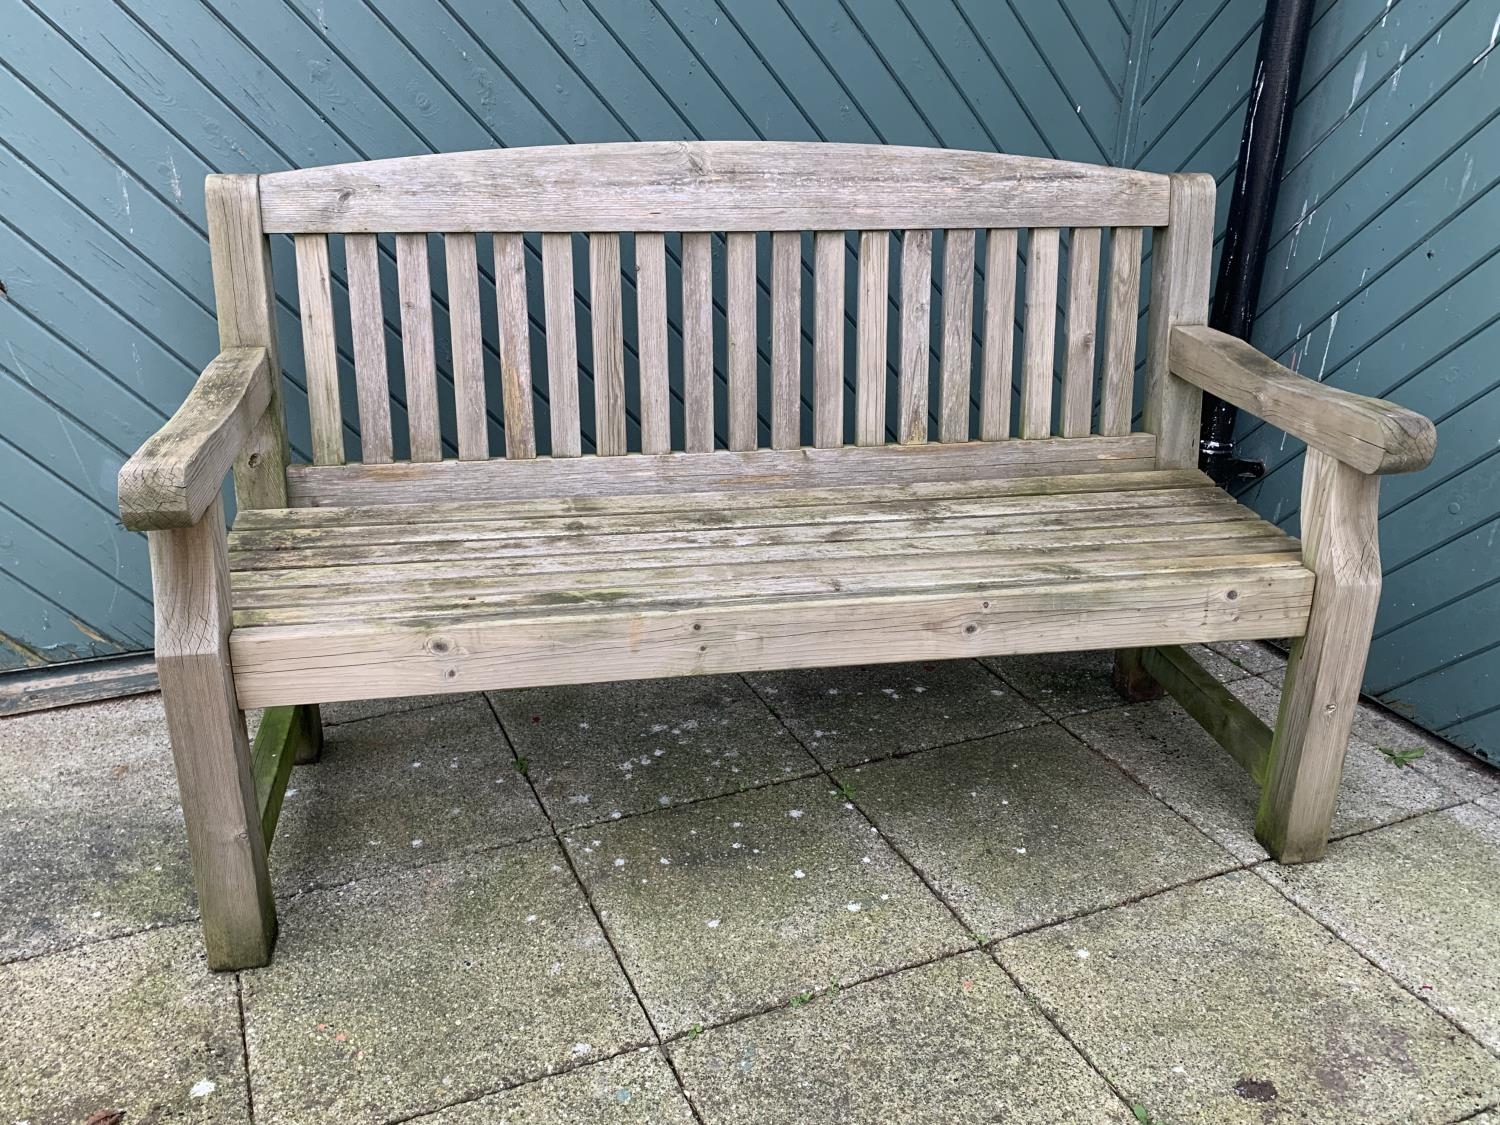 A two seat garden bench, 153cm x 94cm x 70cm